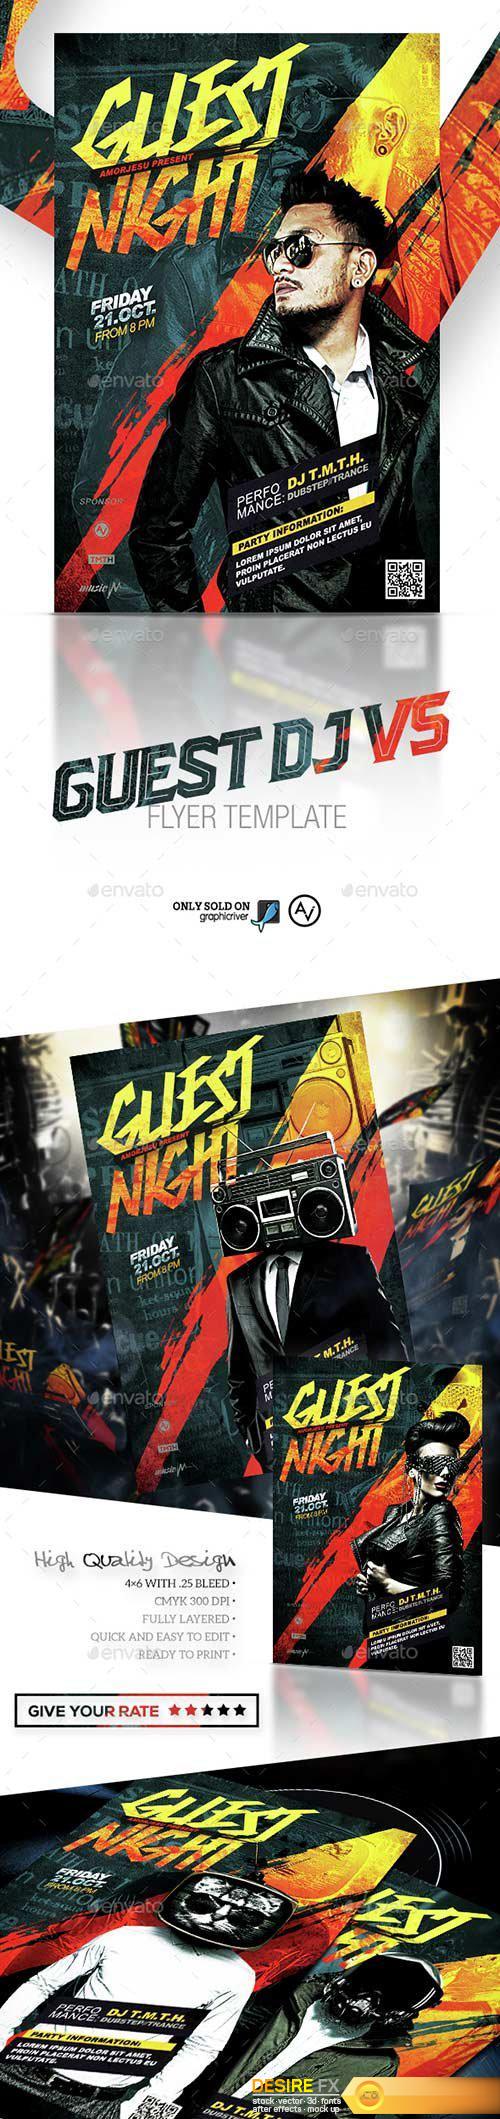 Graphicriver - Guest DJ Flyer Template V5 15359906